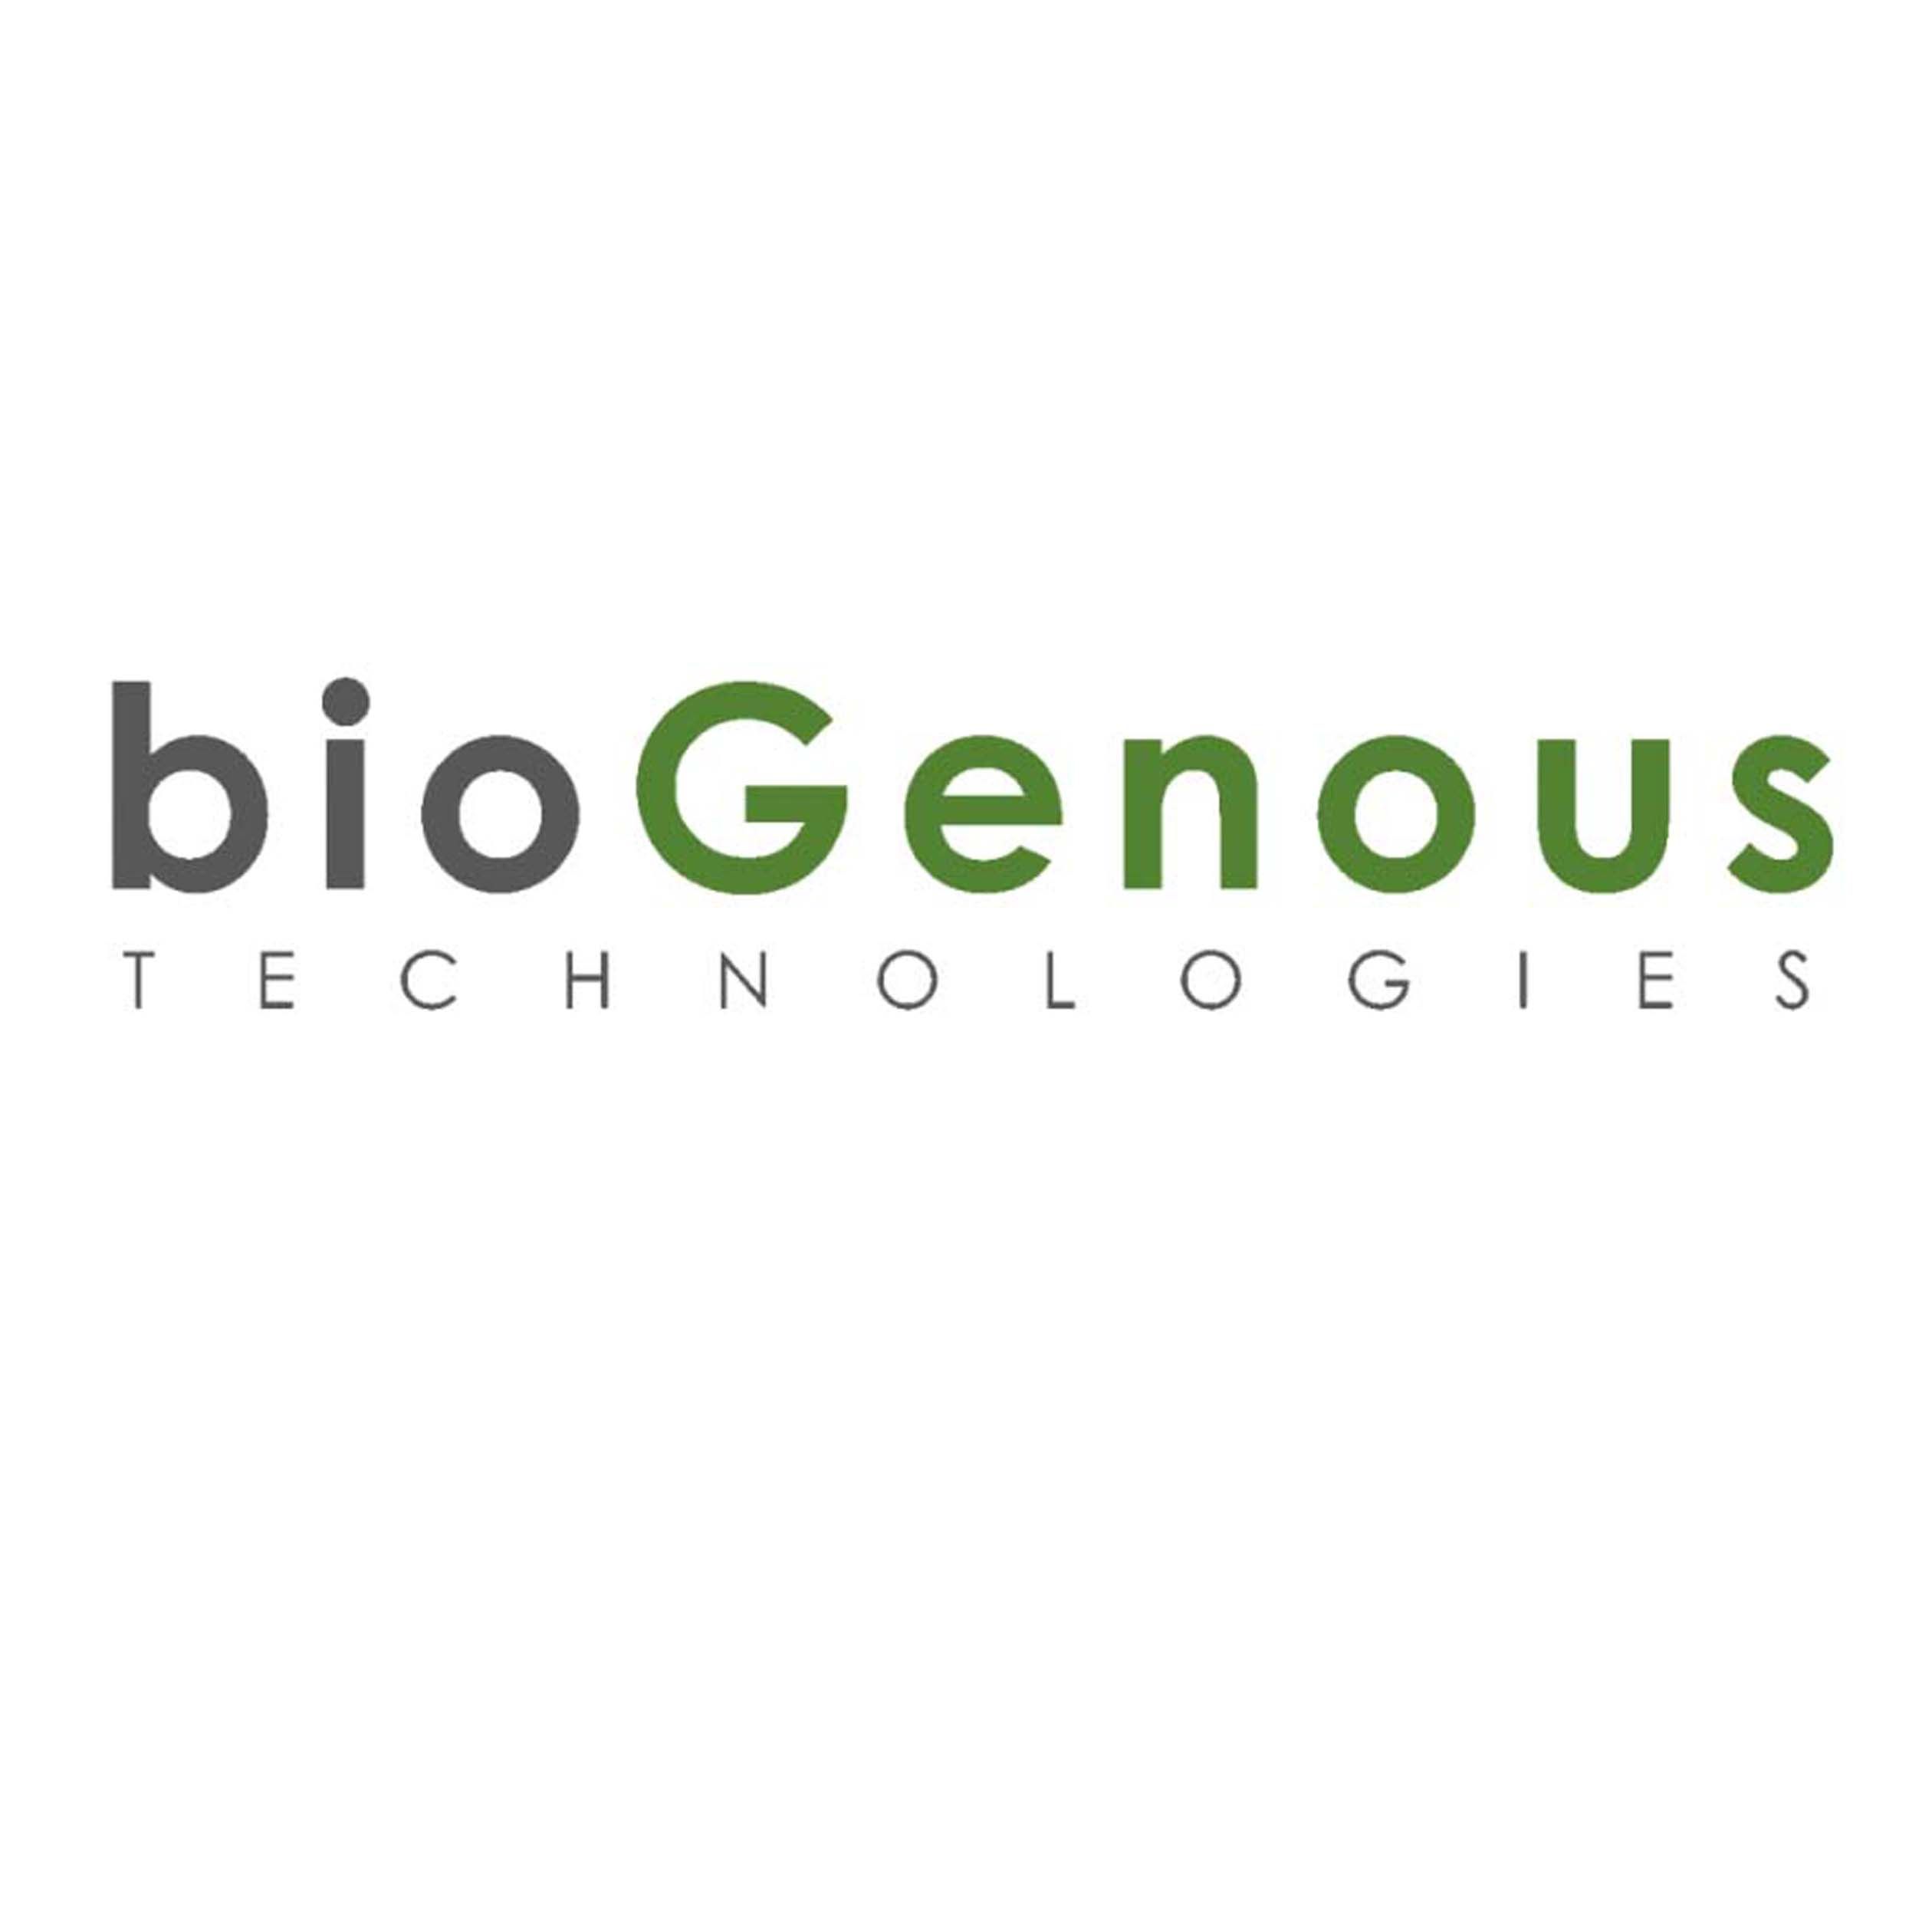 bioGenous（伯桢生物）生长因子、正常组织类器官培养试剂盒、肿瘤类器官培养试剂盒、全流程操作试剂盒、基础与辅助试剂、小分子